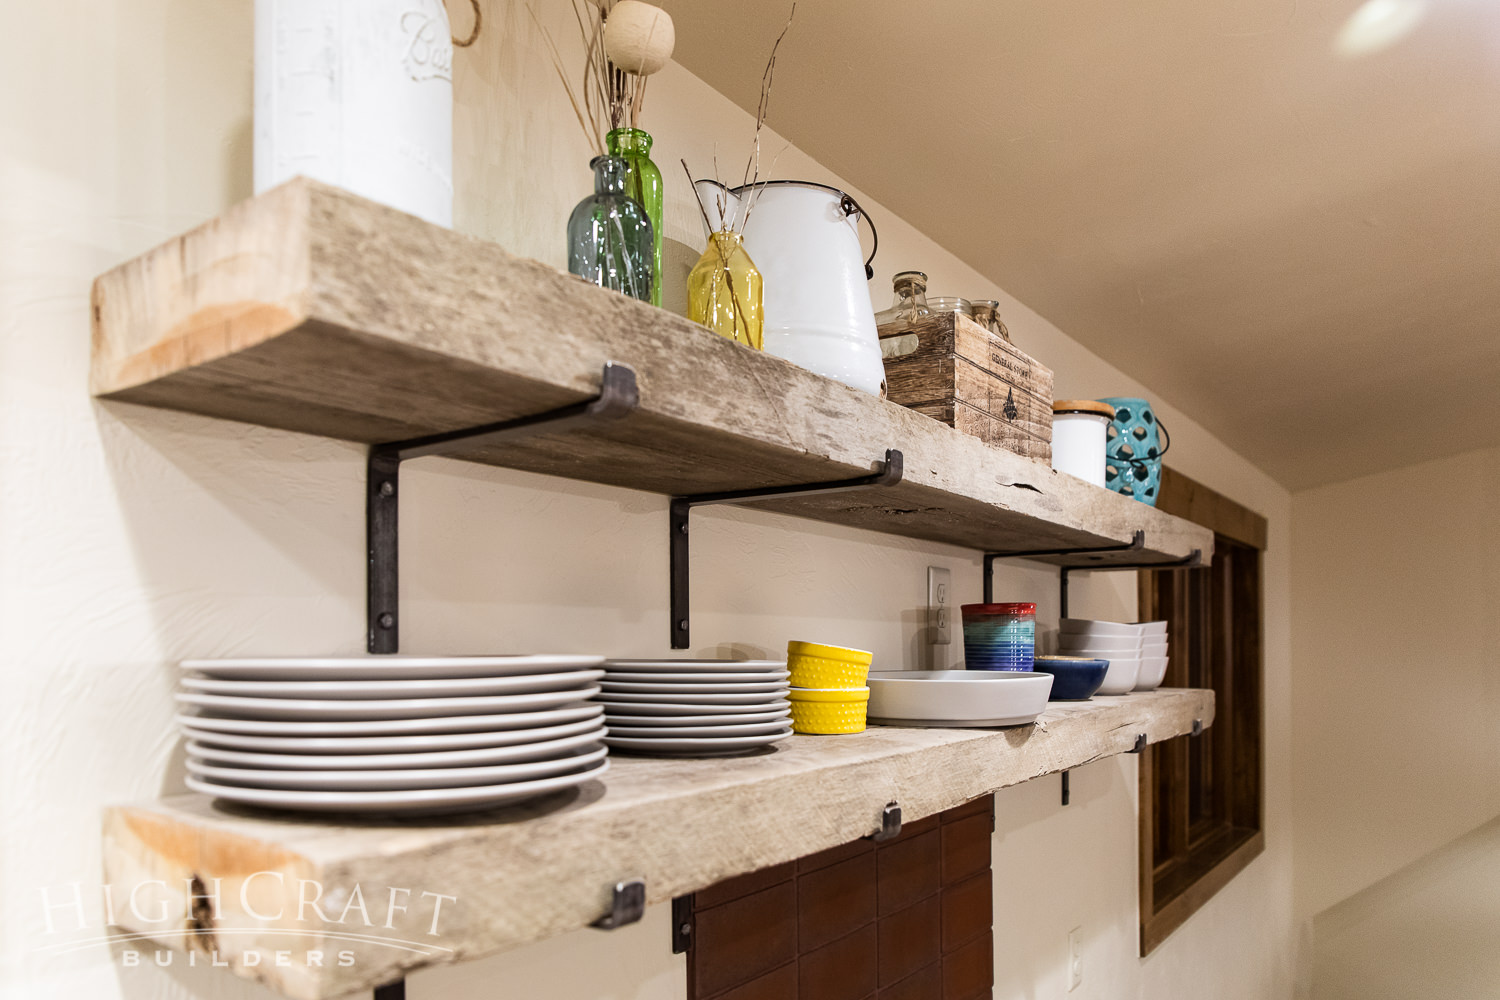 Rustic-Guest-Bunkhouse-kitchen-floating-shelves